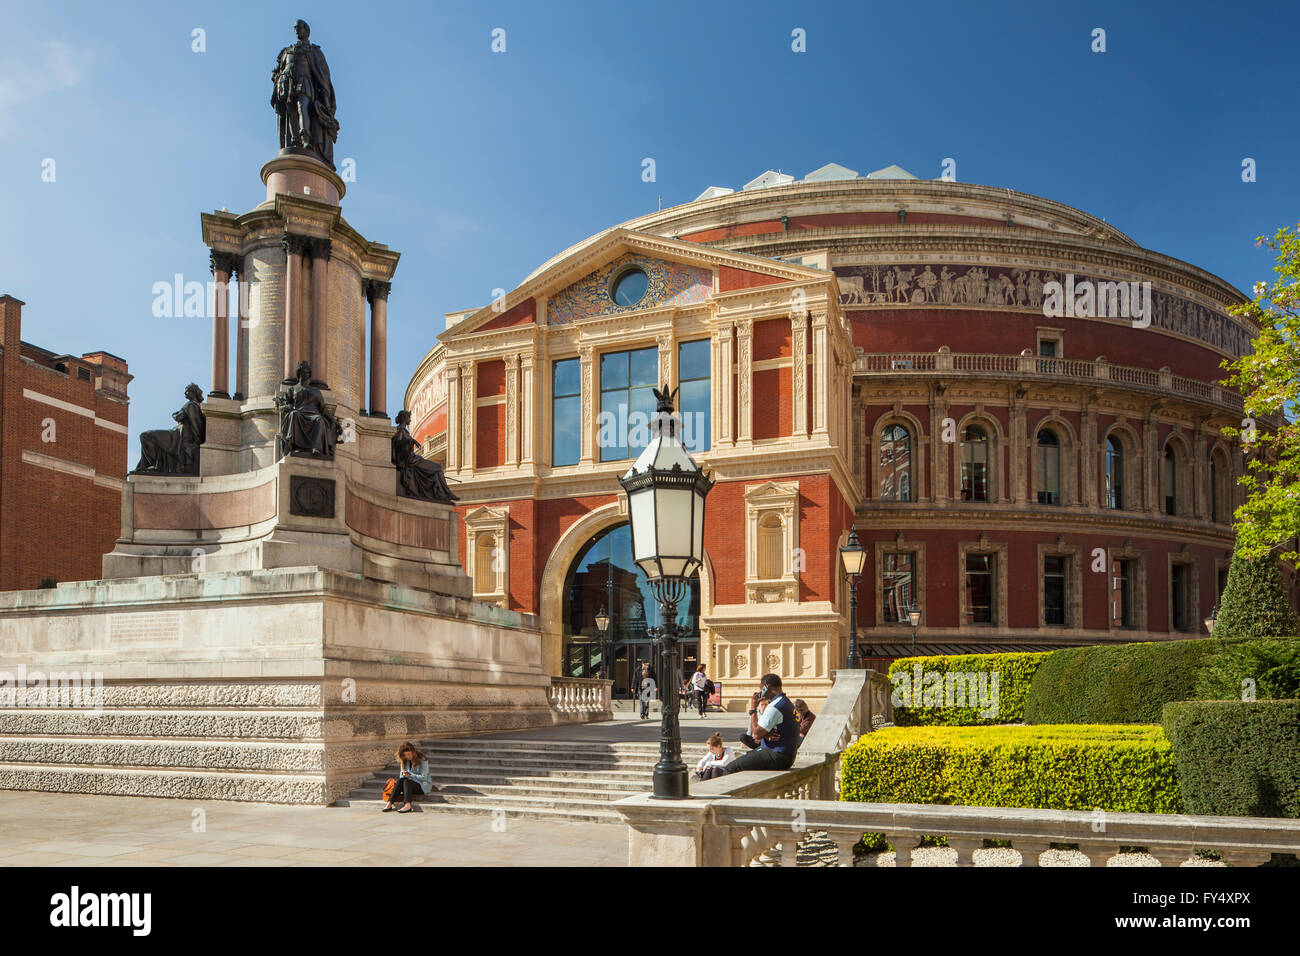 Royal Albert Hall in Kensington, London, England. Stock Photo